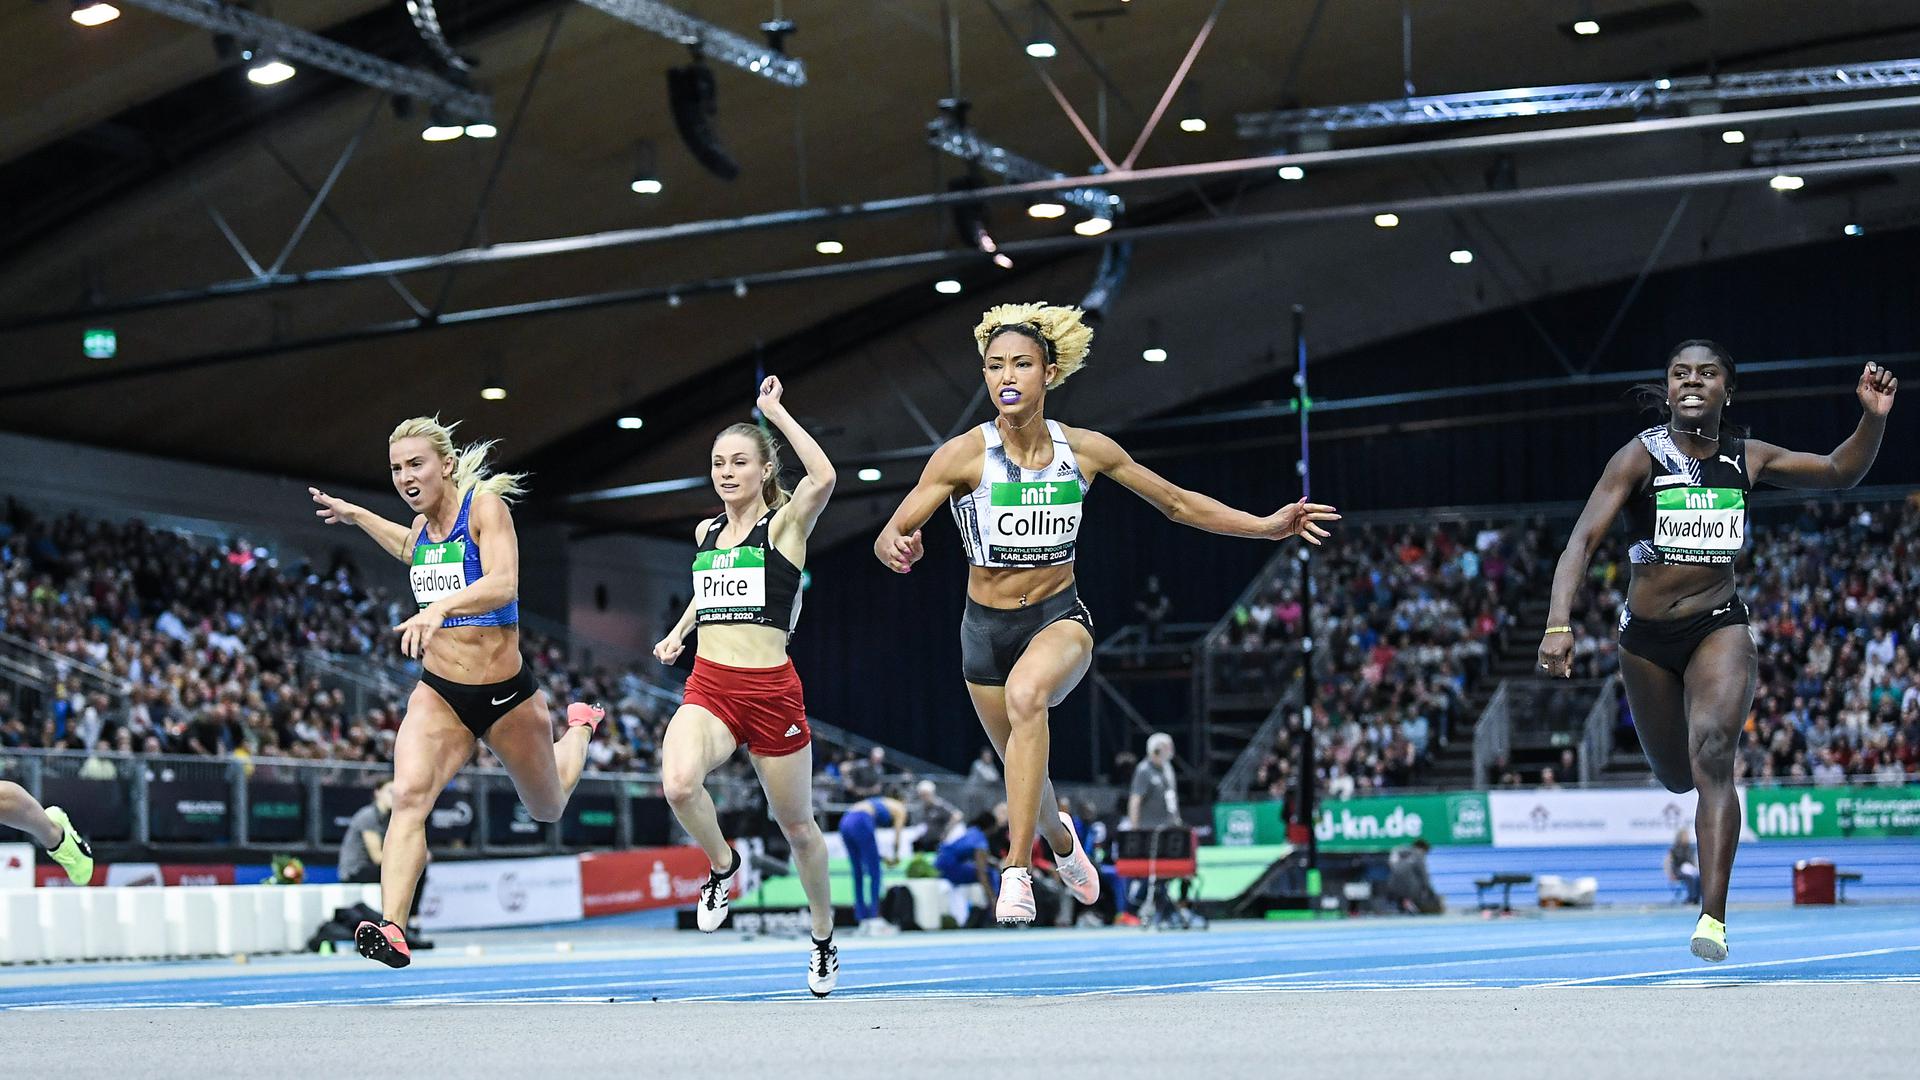 Shania Collins (USA/ 60m Lauf) siegt.

GES/Leichtathletik/ Indoor Meeting Karlsruhe | IAAF World Indoor Tour, 31.01.2020


